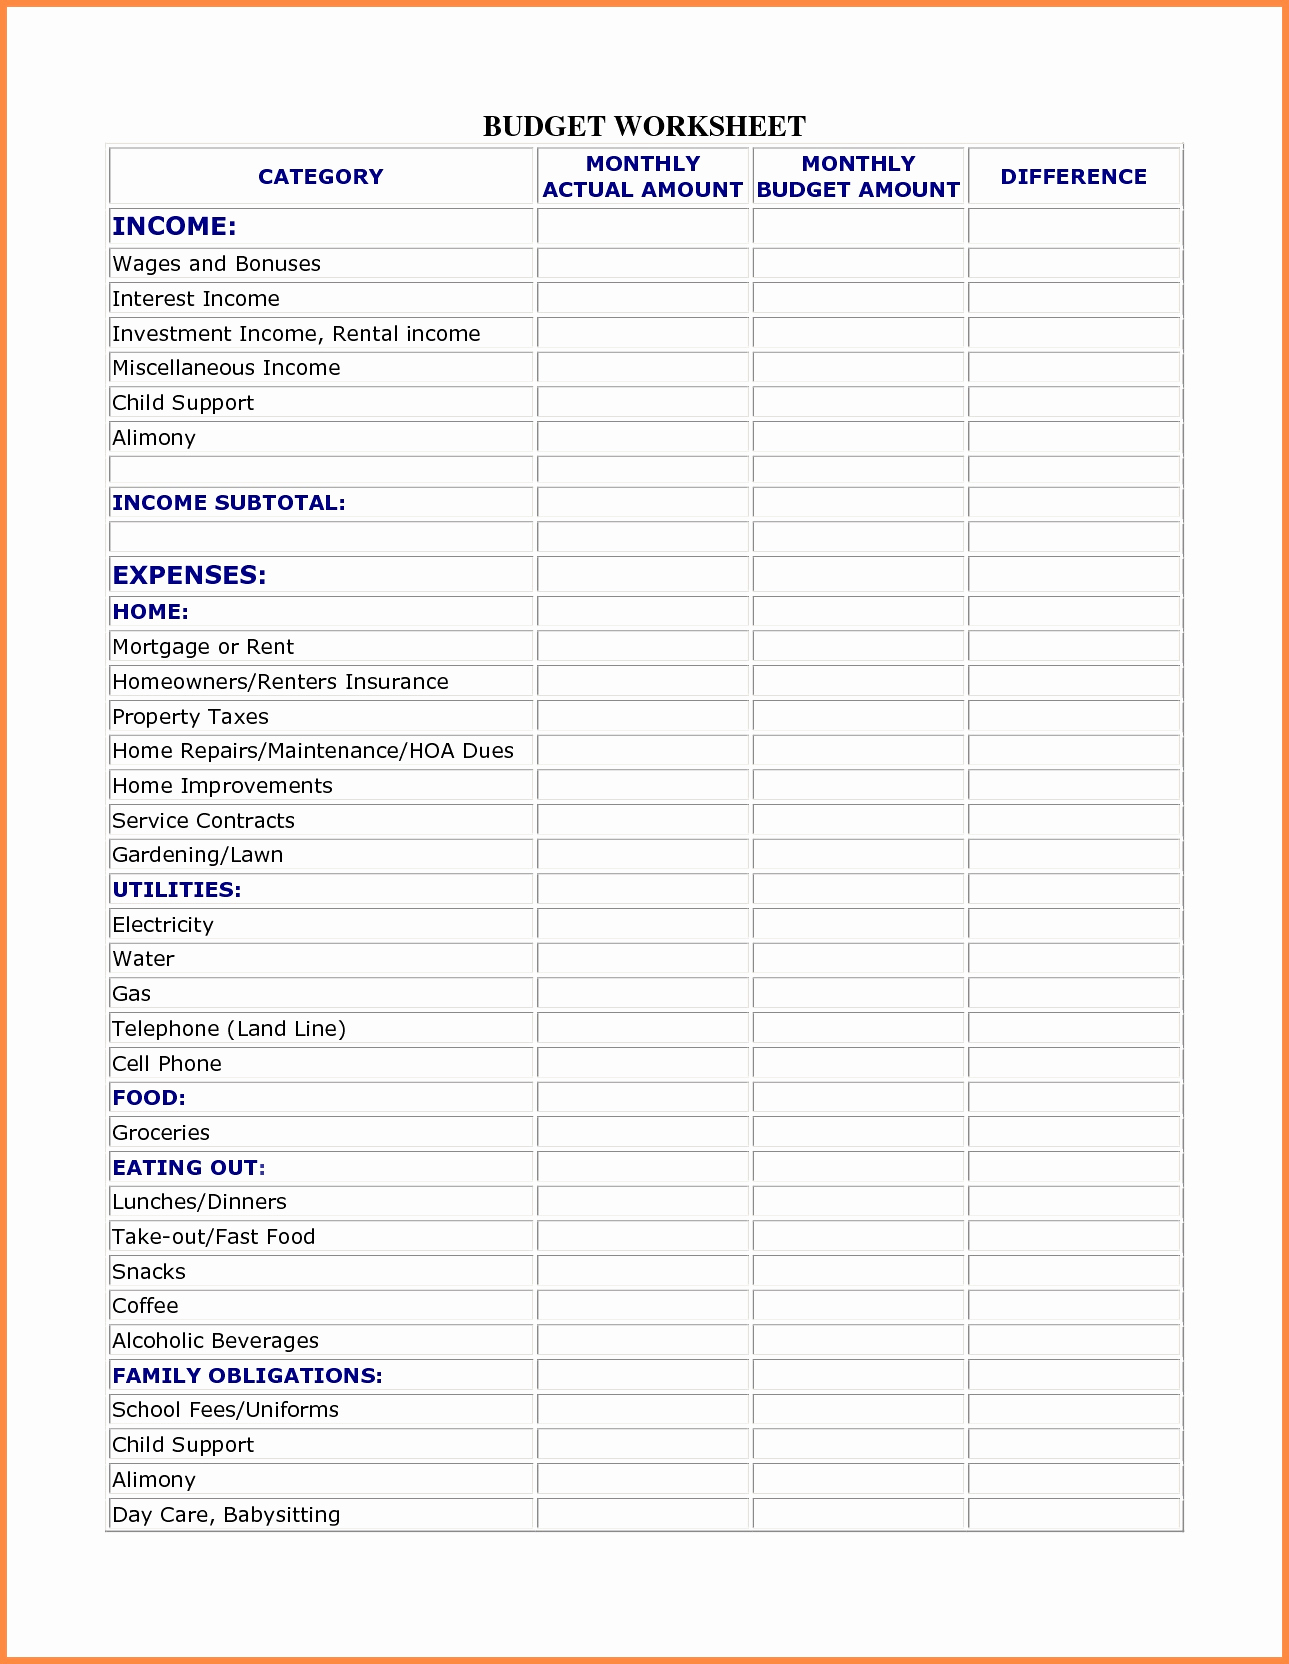 restaurant-budget-spreadsheet-free-download-for-sheet-restaurant-budget